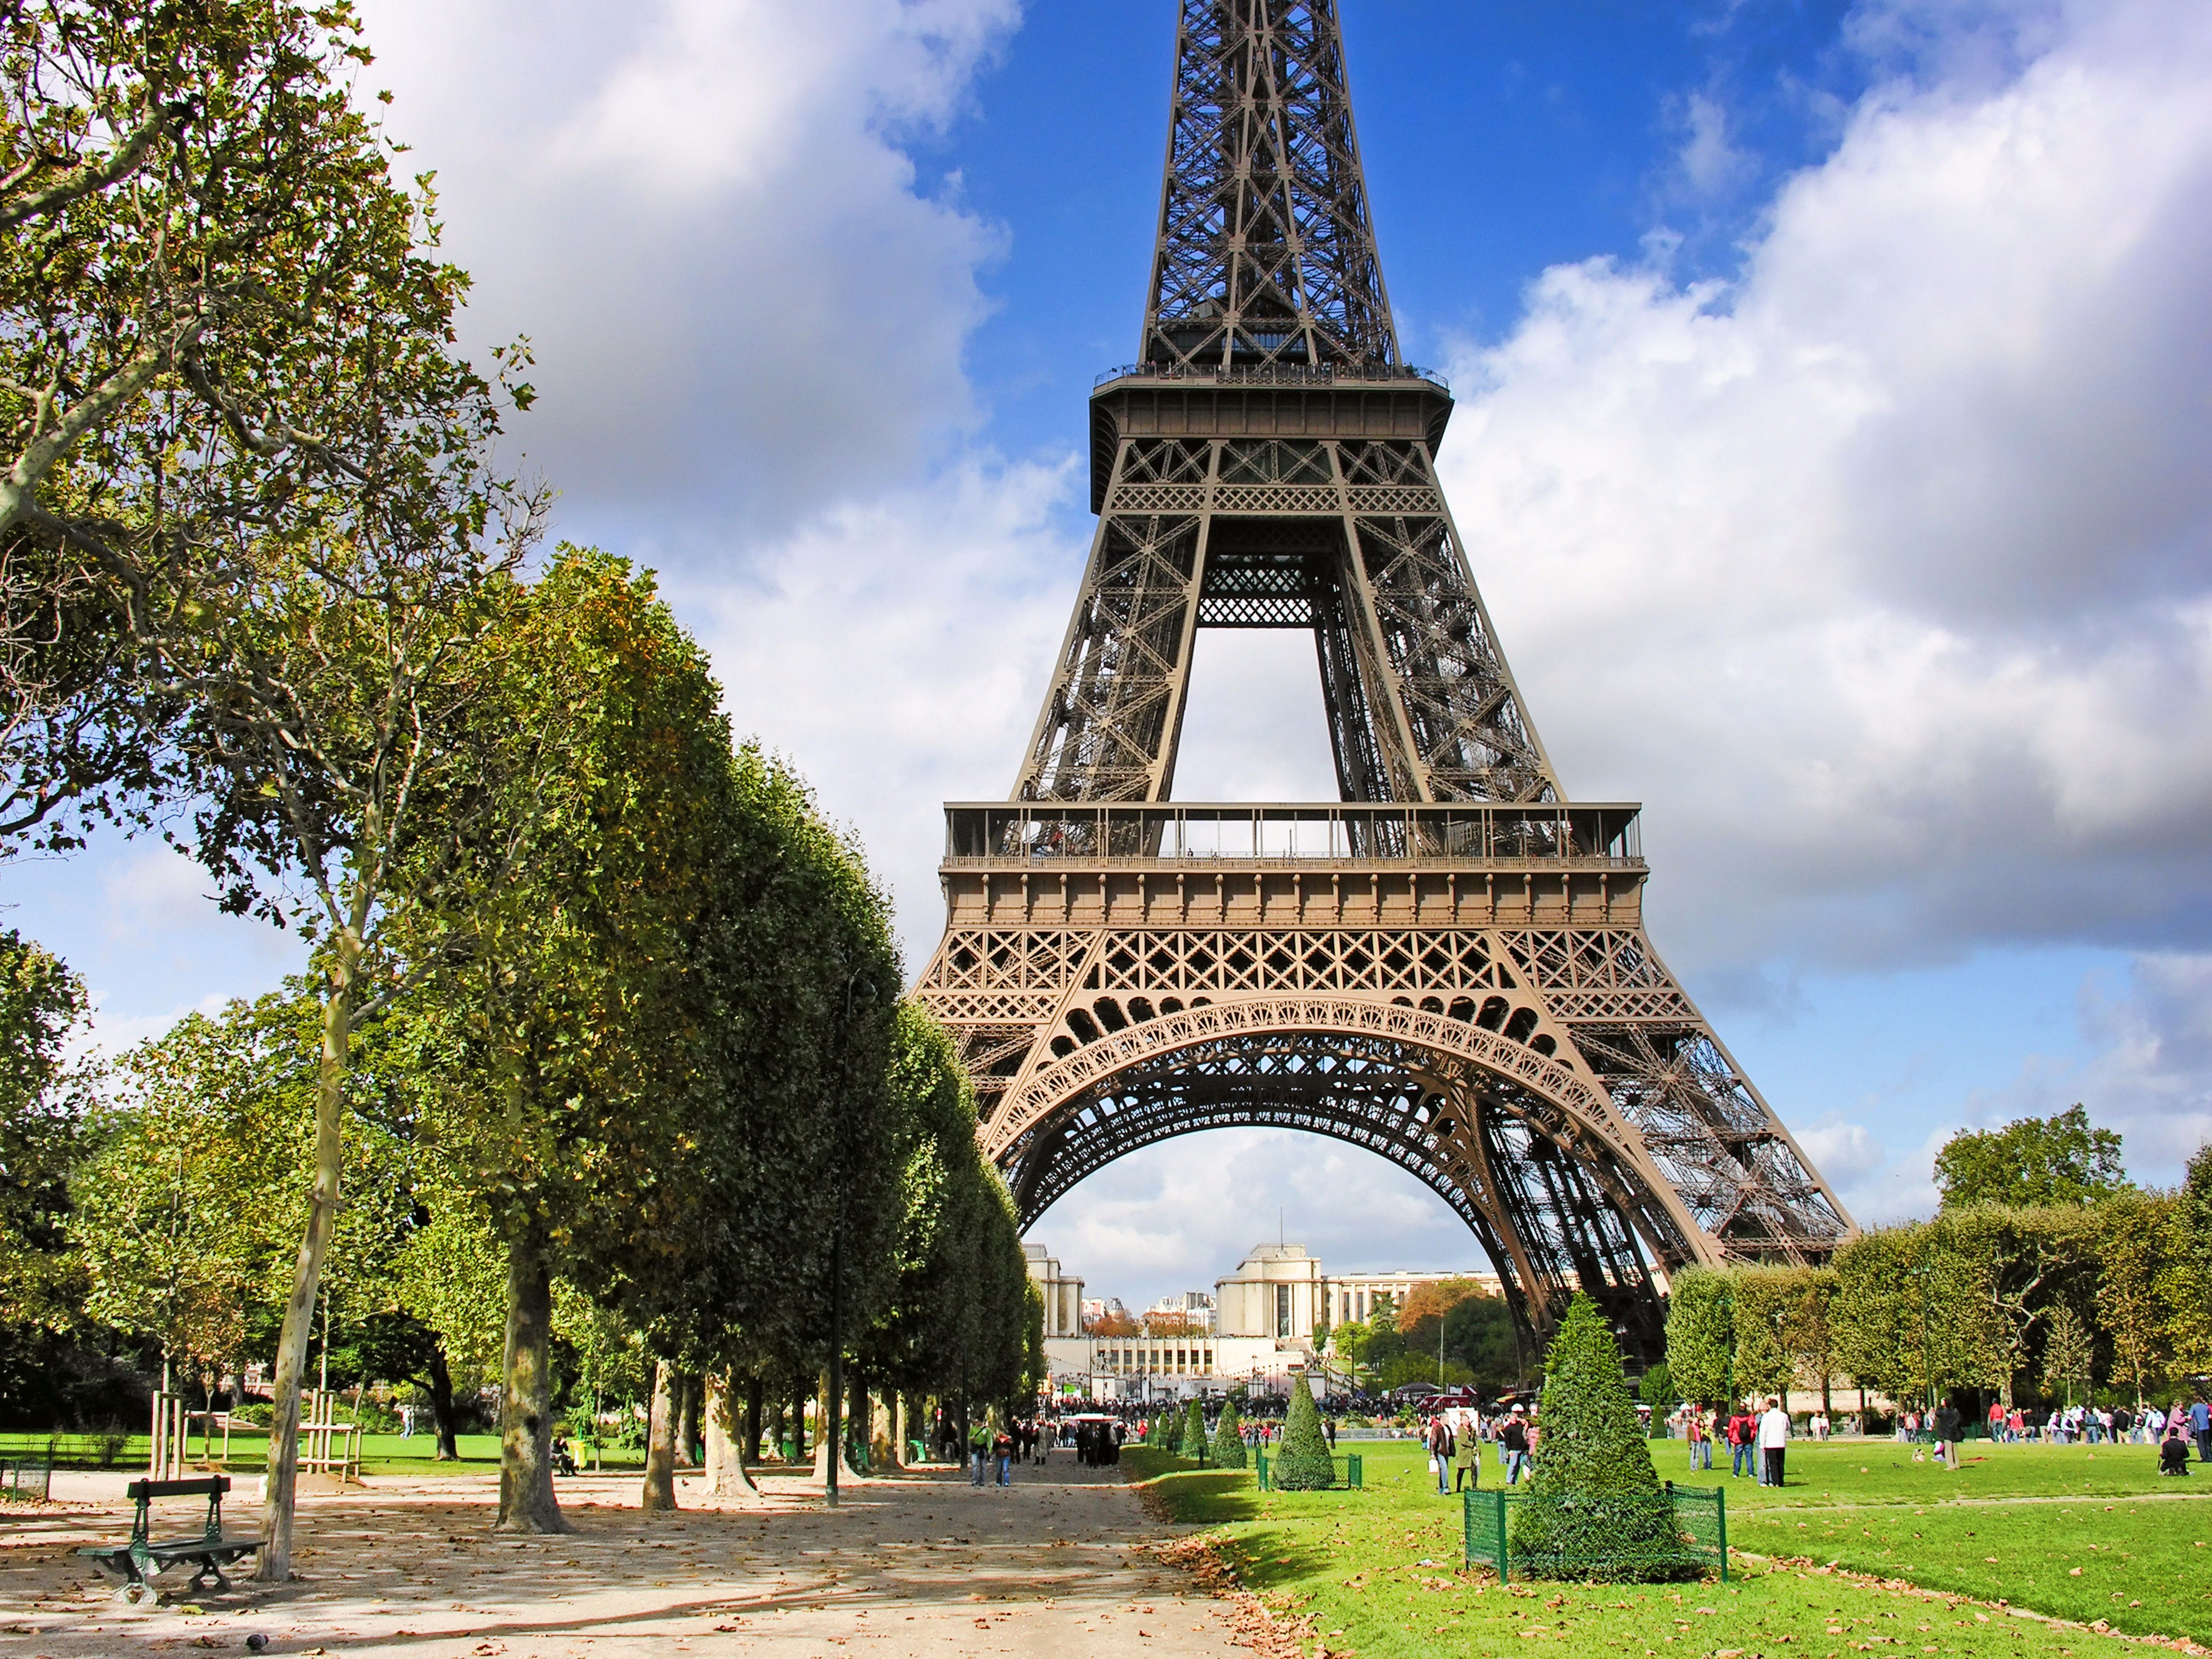 74 Eiffel Tower Desktop Wallpaper On Wallpapersafari